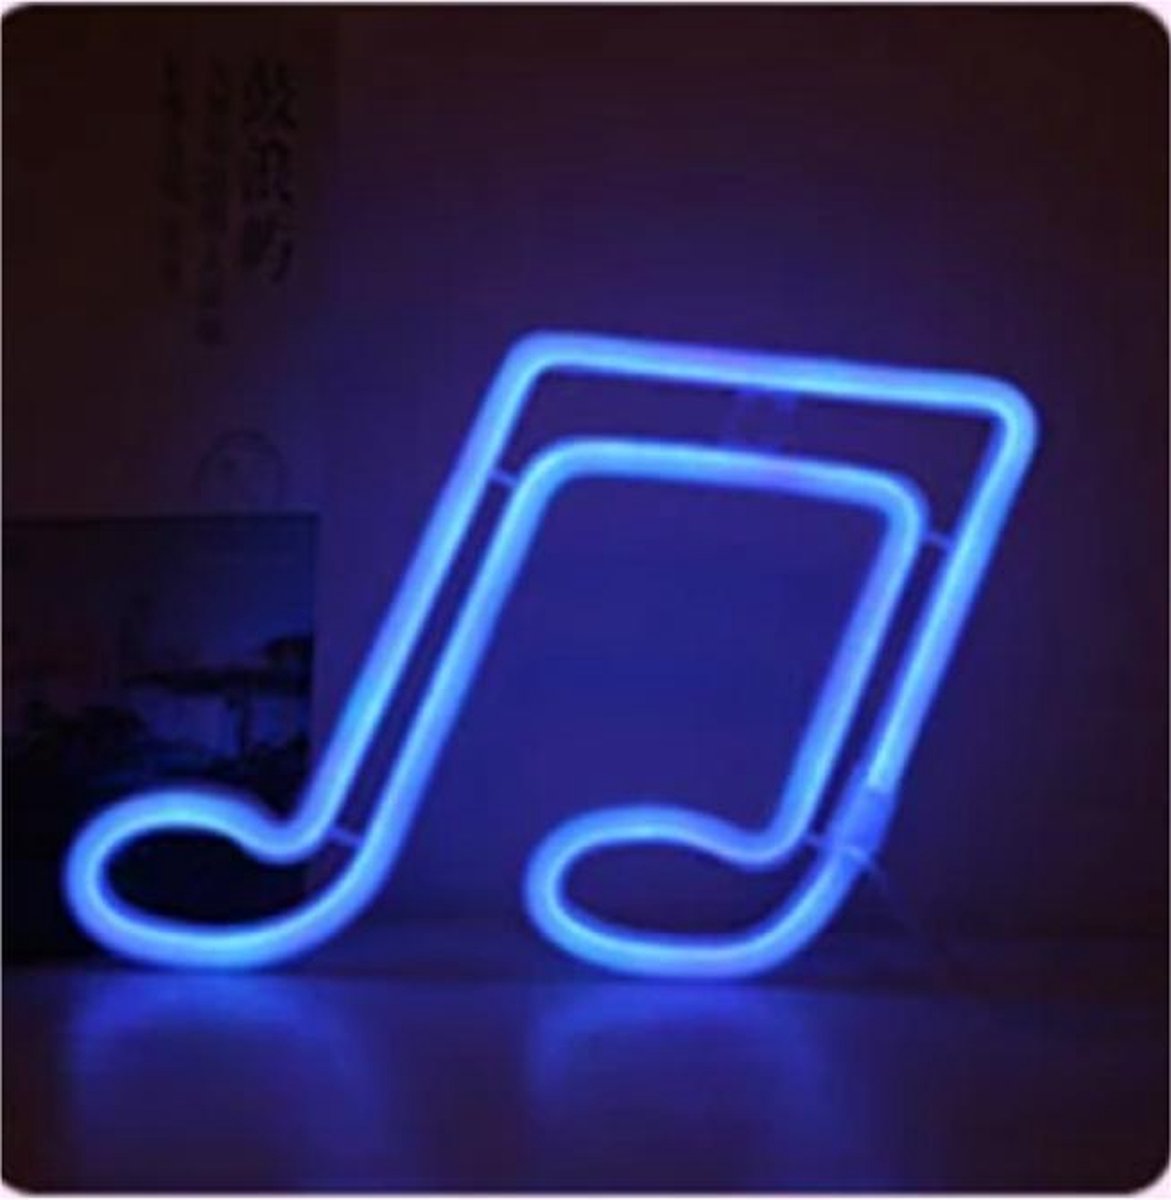 Neon lamp muzieknoot- Blauw- Nachtlamp- Neon wandlamp- Neon verlichting- Sfeer verlichting- Neon lamp muur